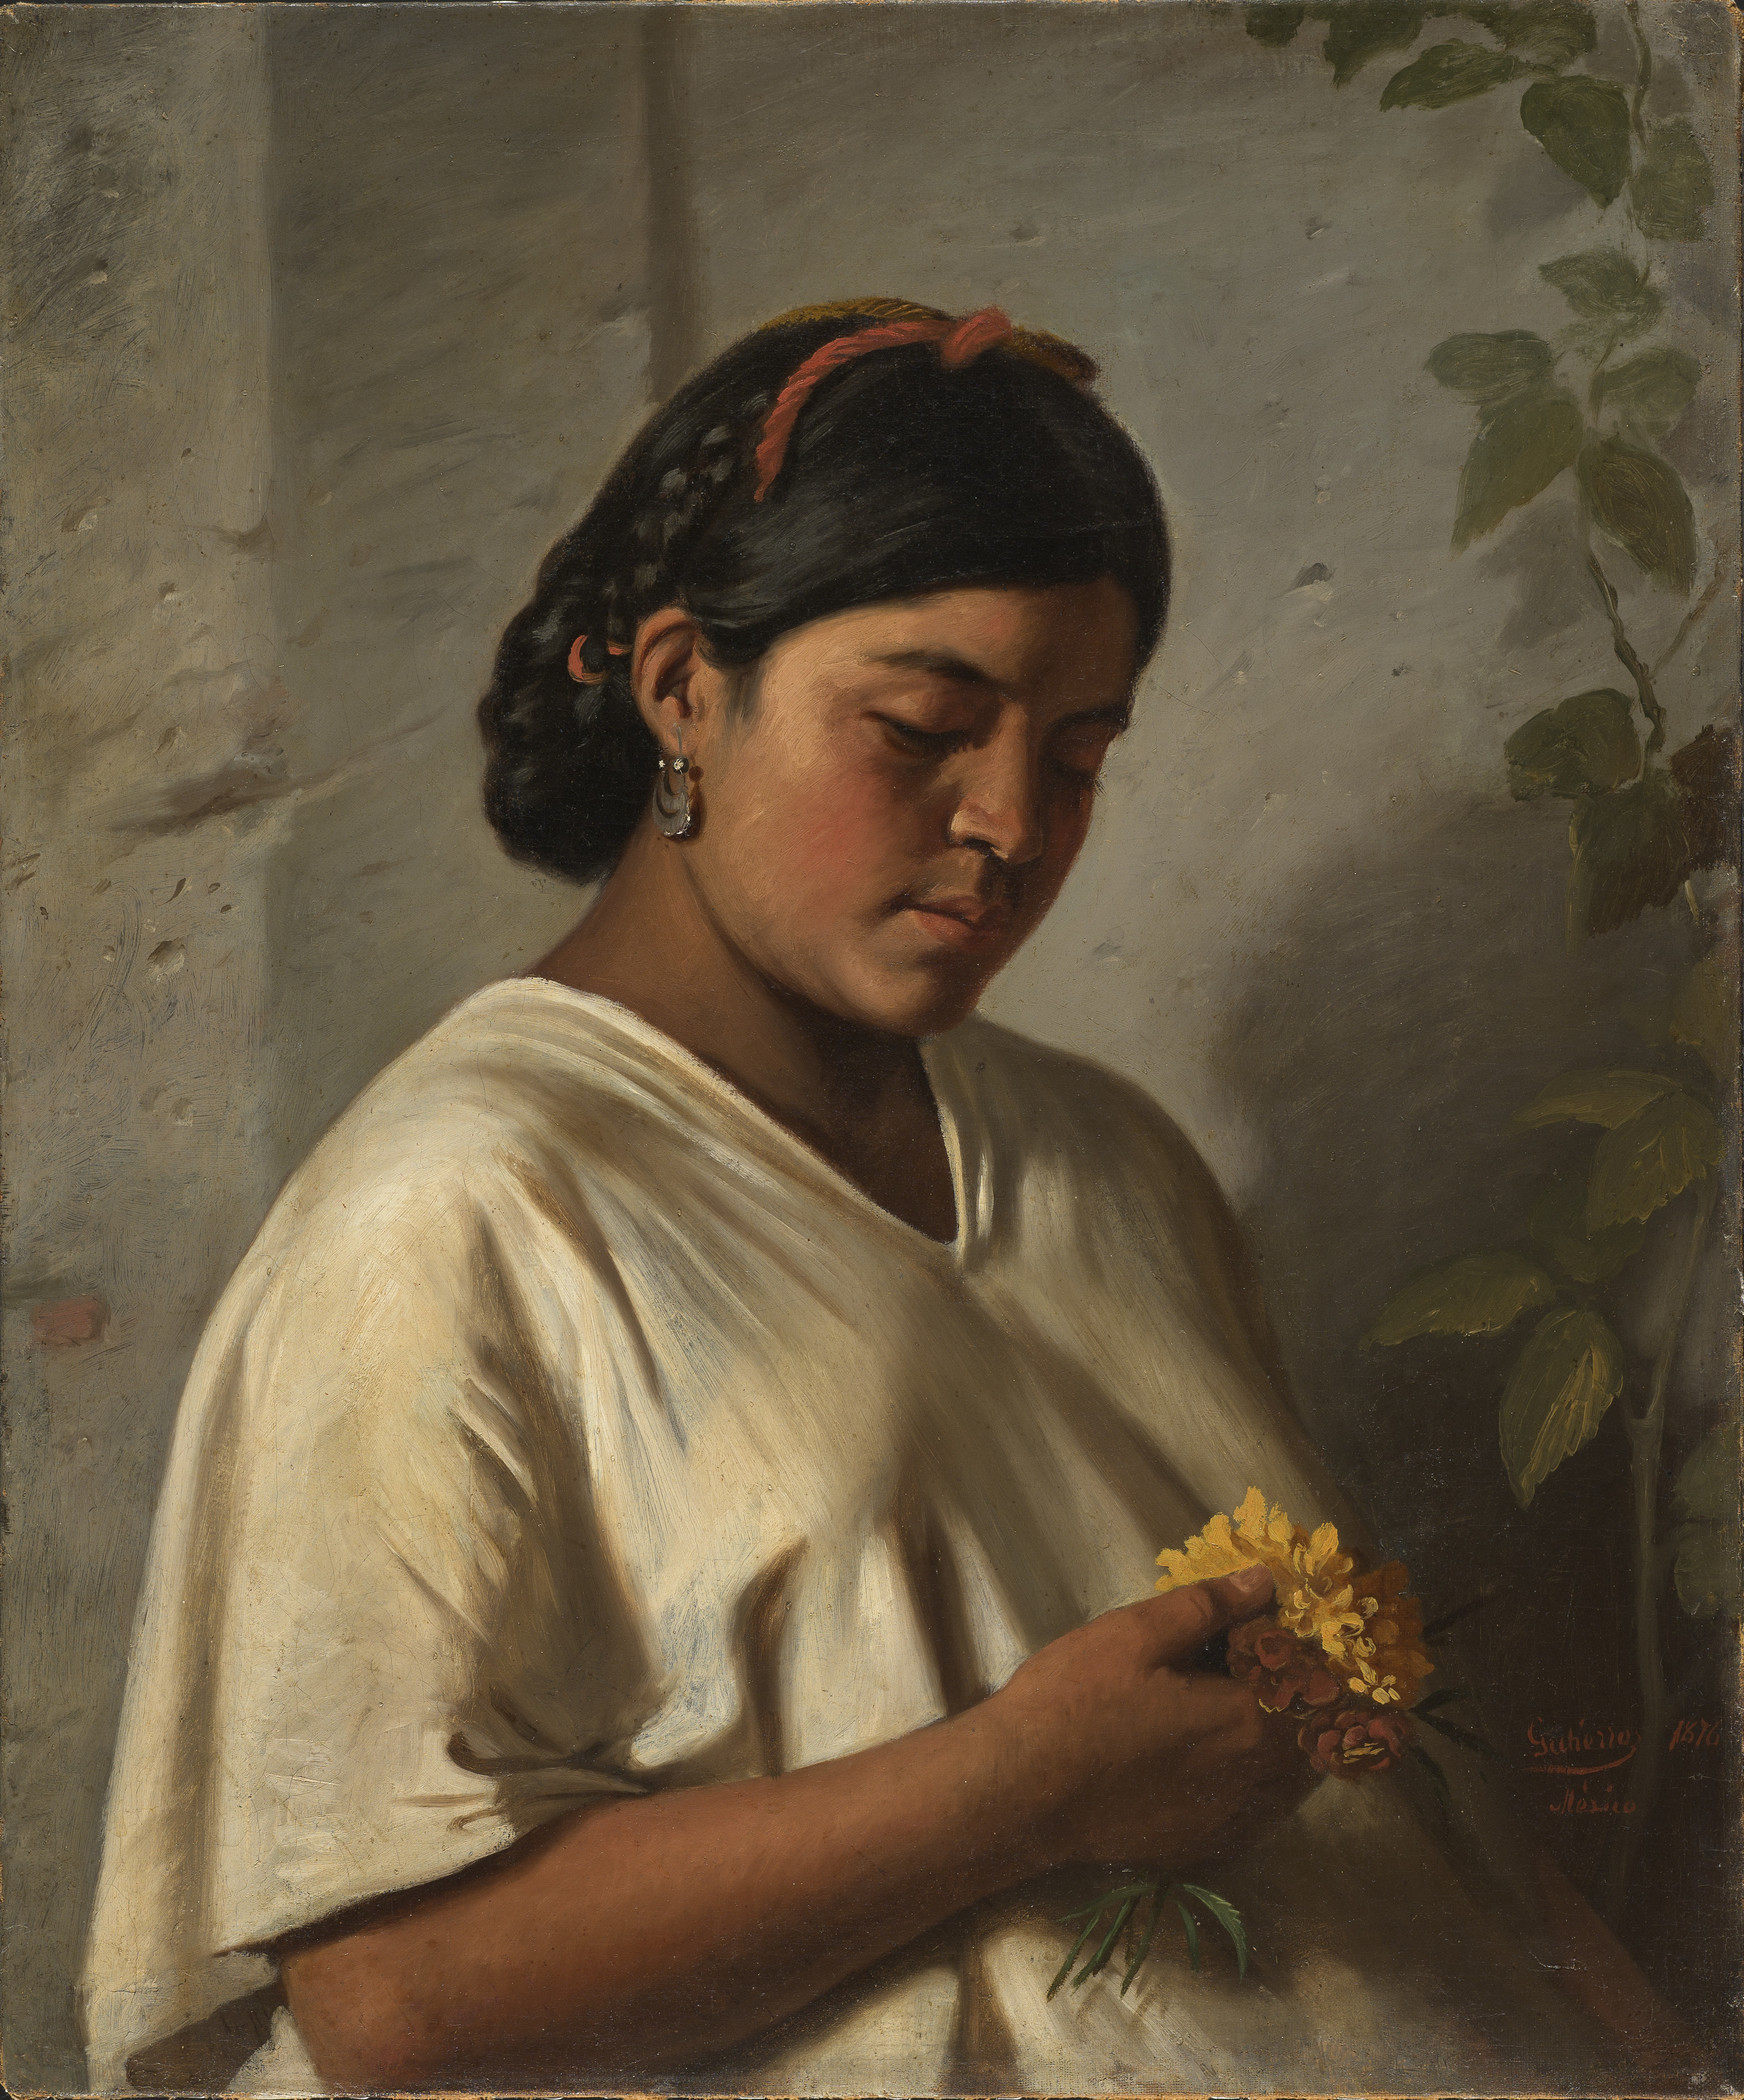 Indian Woman with Marigold by Felipe Santiago Gutiérrez - 1876 - 67.95 × 56.52 cm LACMA, Los Angeles County Museum of Art